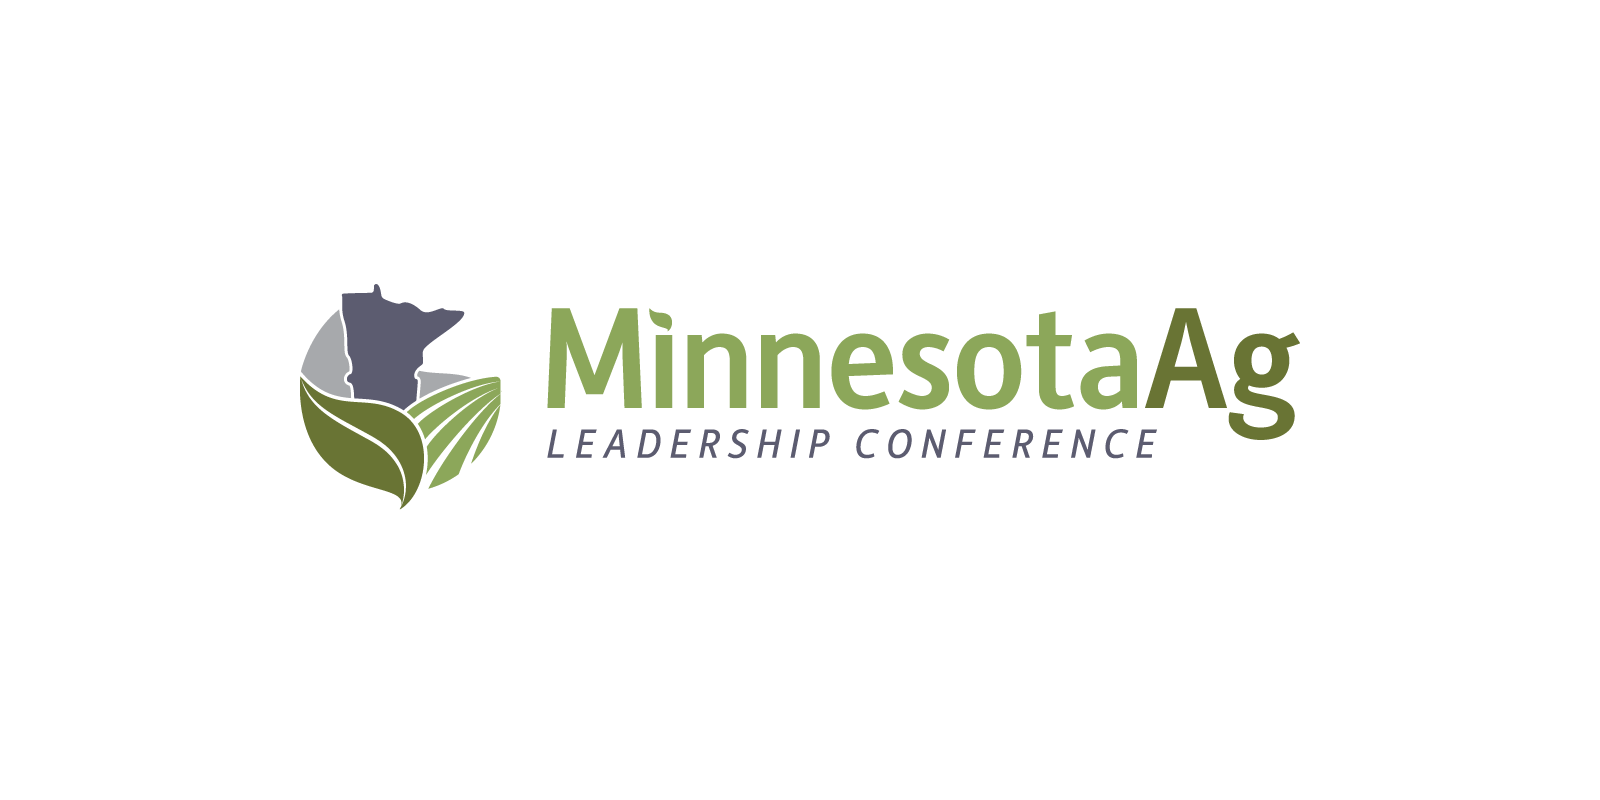 The final Minnesota Ag Leadership Conference logo